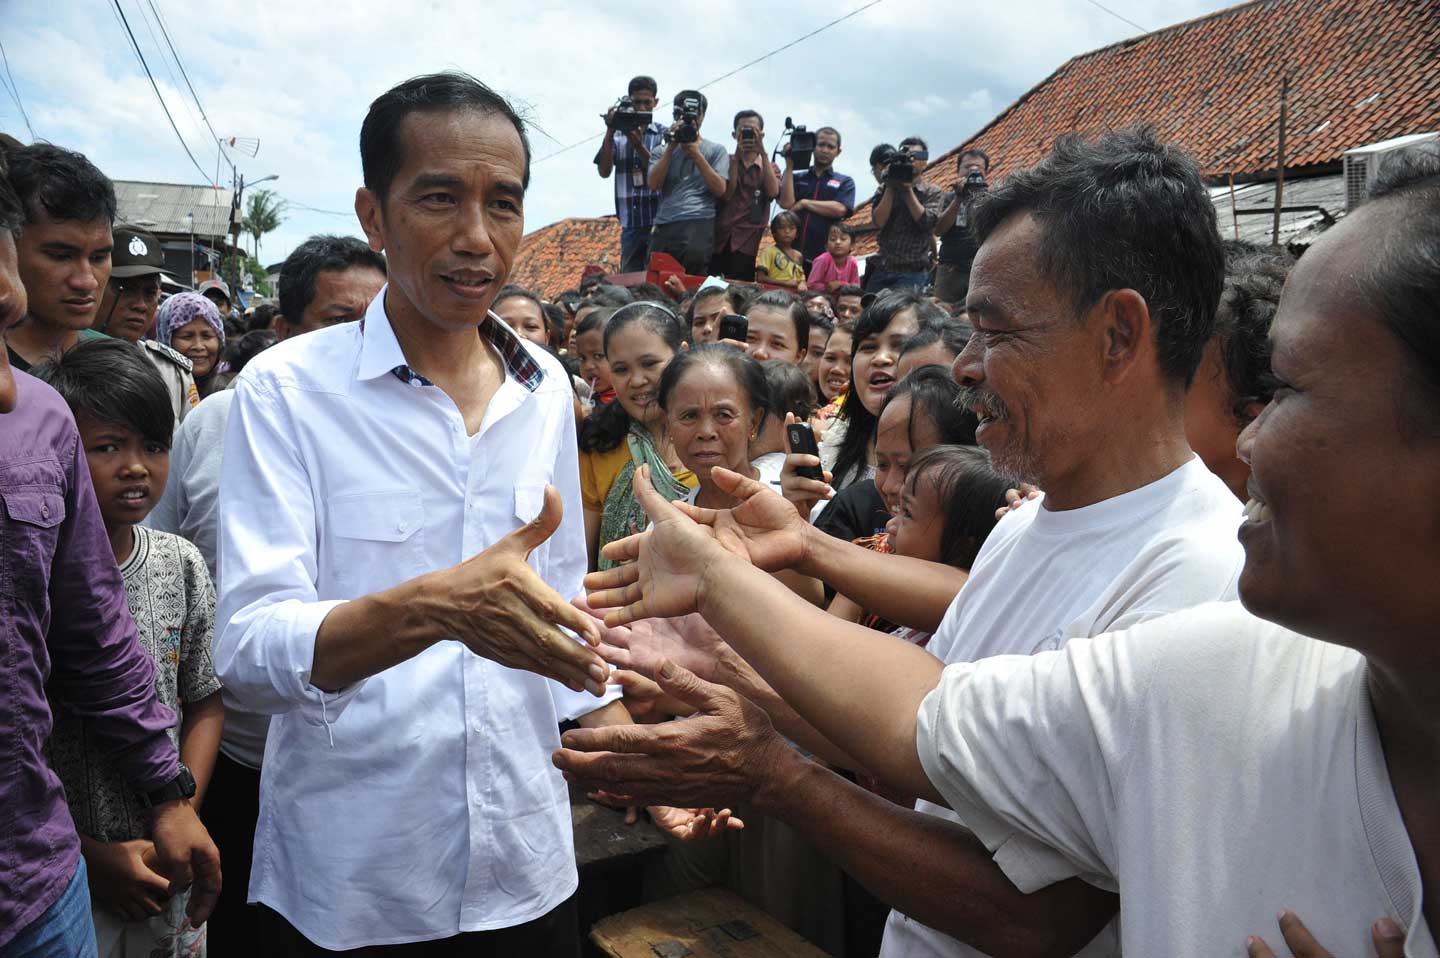 Indonesian President Joko “Jokowi” Widodo shaking hands with people on the street